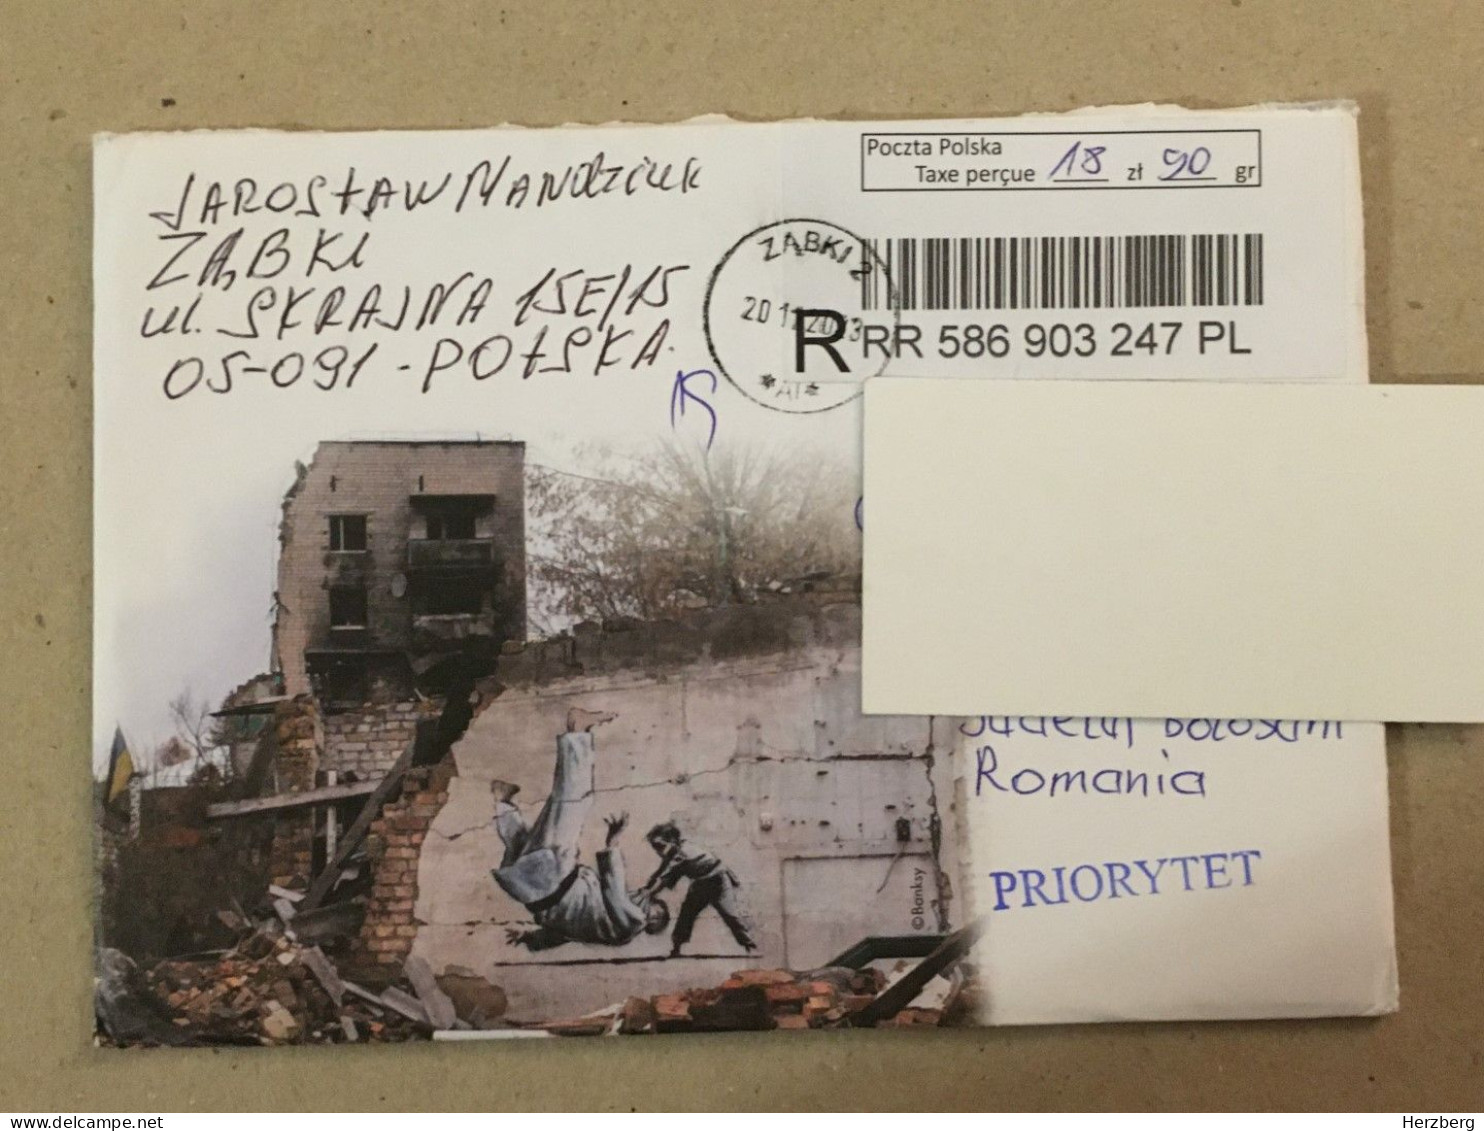 Poland Polska Used Letter Stamp Cover Registered Barcode Label Printed Sticker Stamp Banksy Artist Ukraine FDC 2023 - Covers & Documents